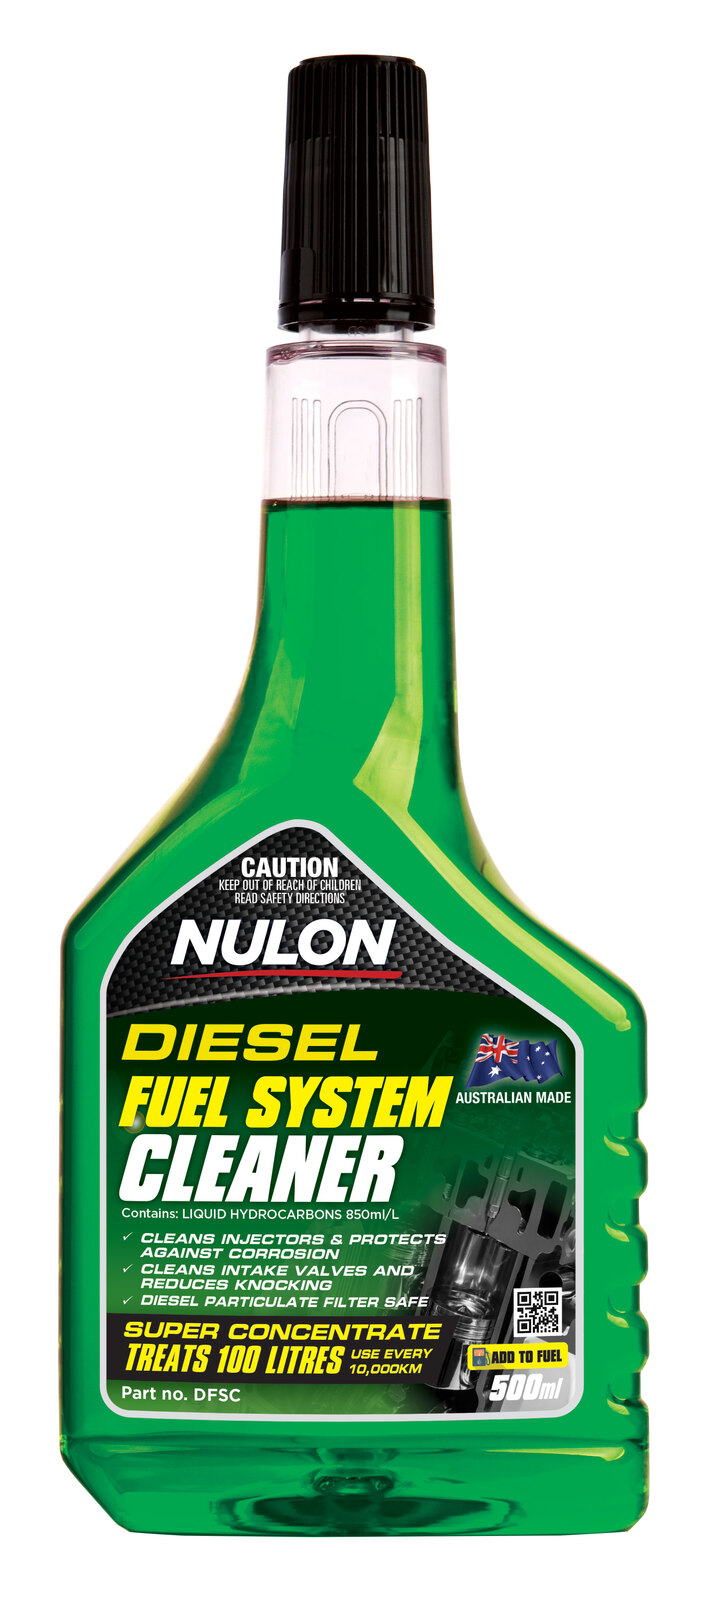 NULON 500ml Diesel Fuel System Cleaner, Each